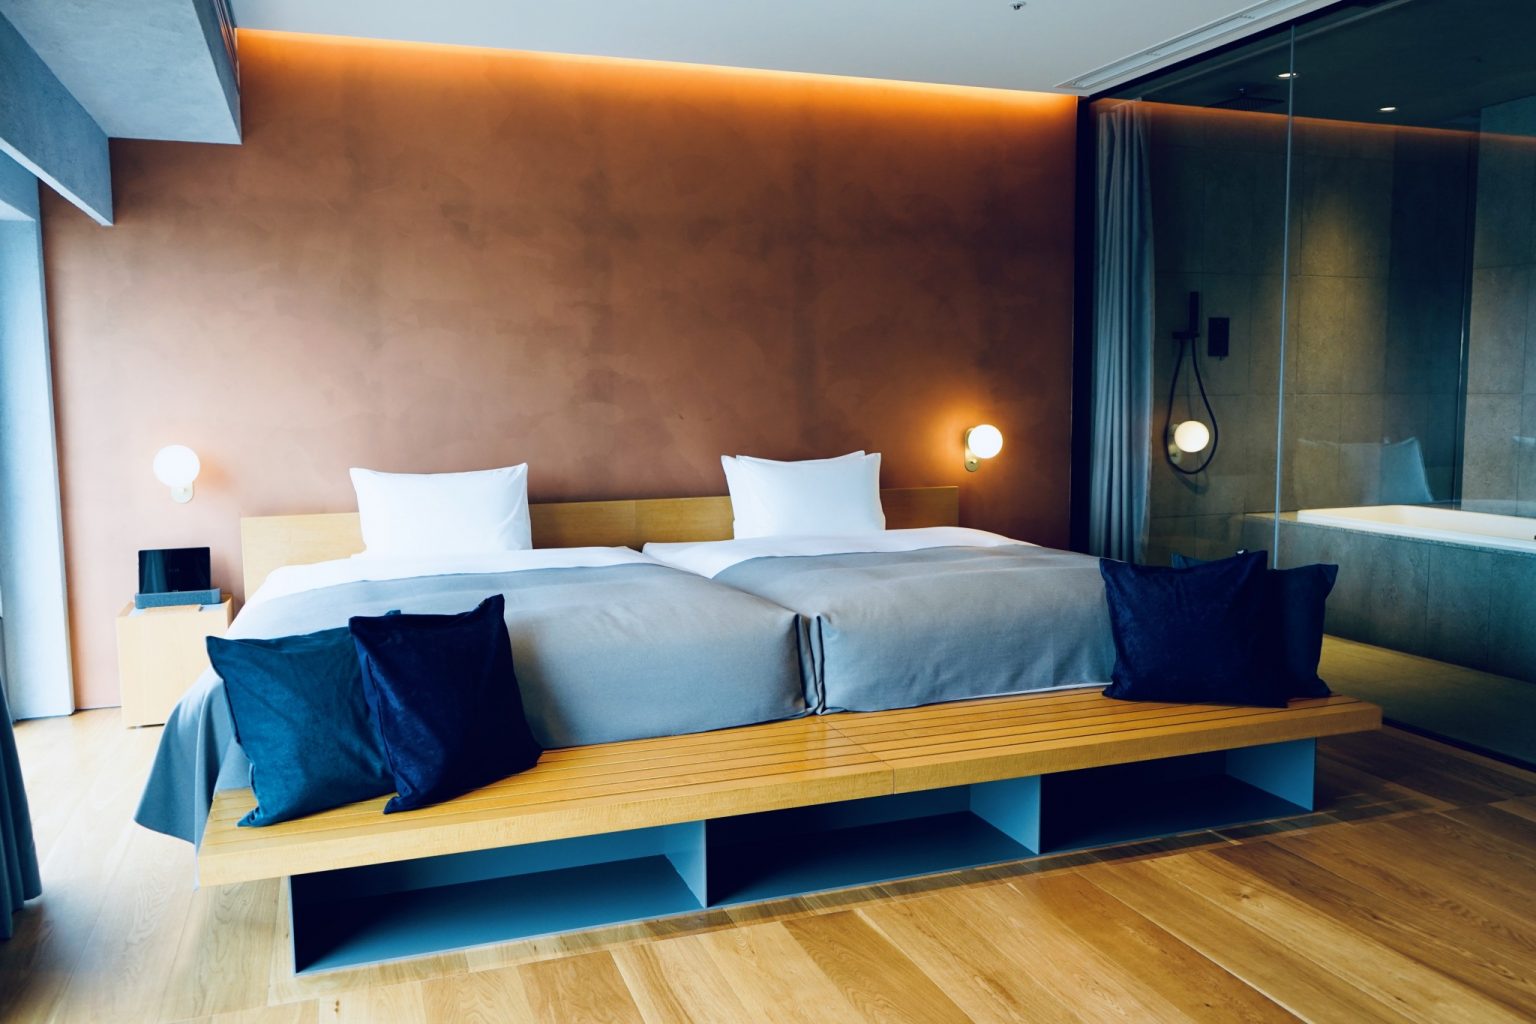 「Suite」1泊1部屋102,700円（税込 ）〜。ベッドの前には公園をイメージした木製のベンチが。